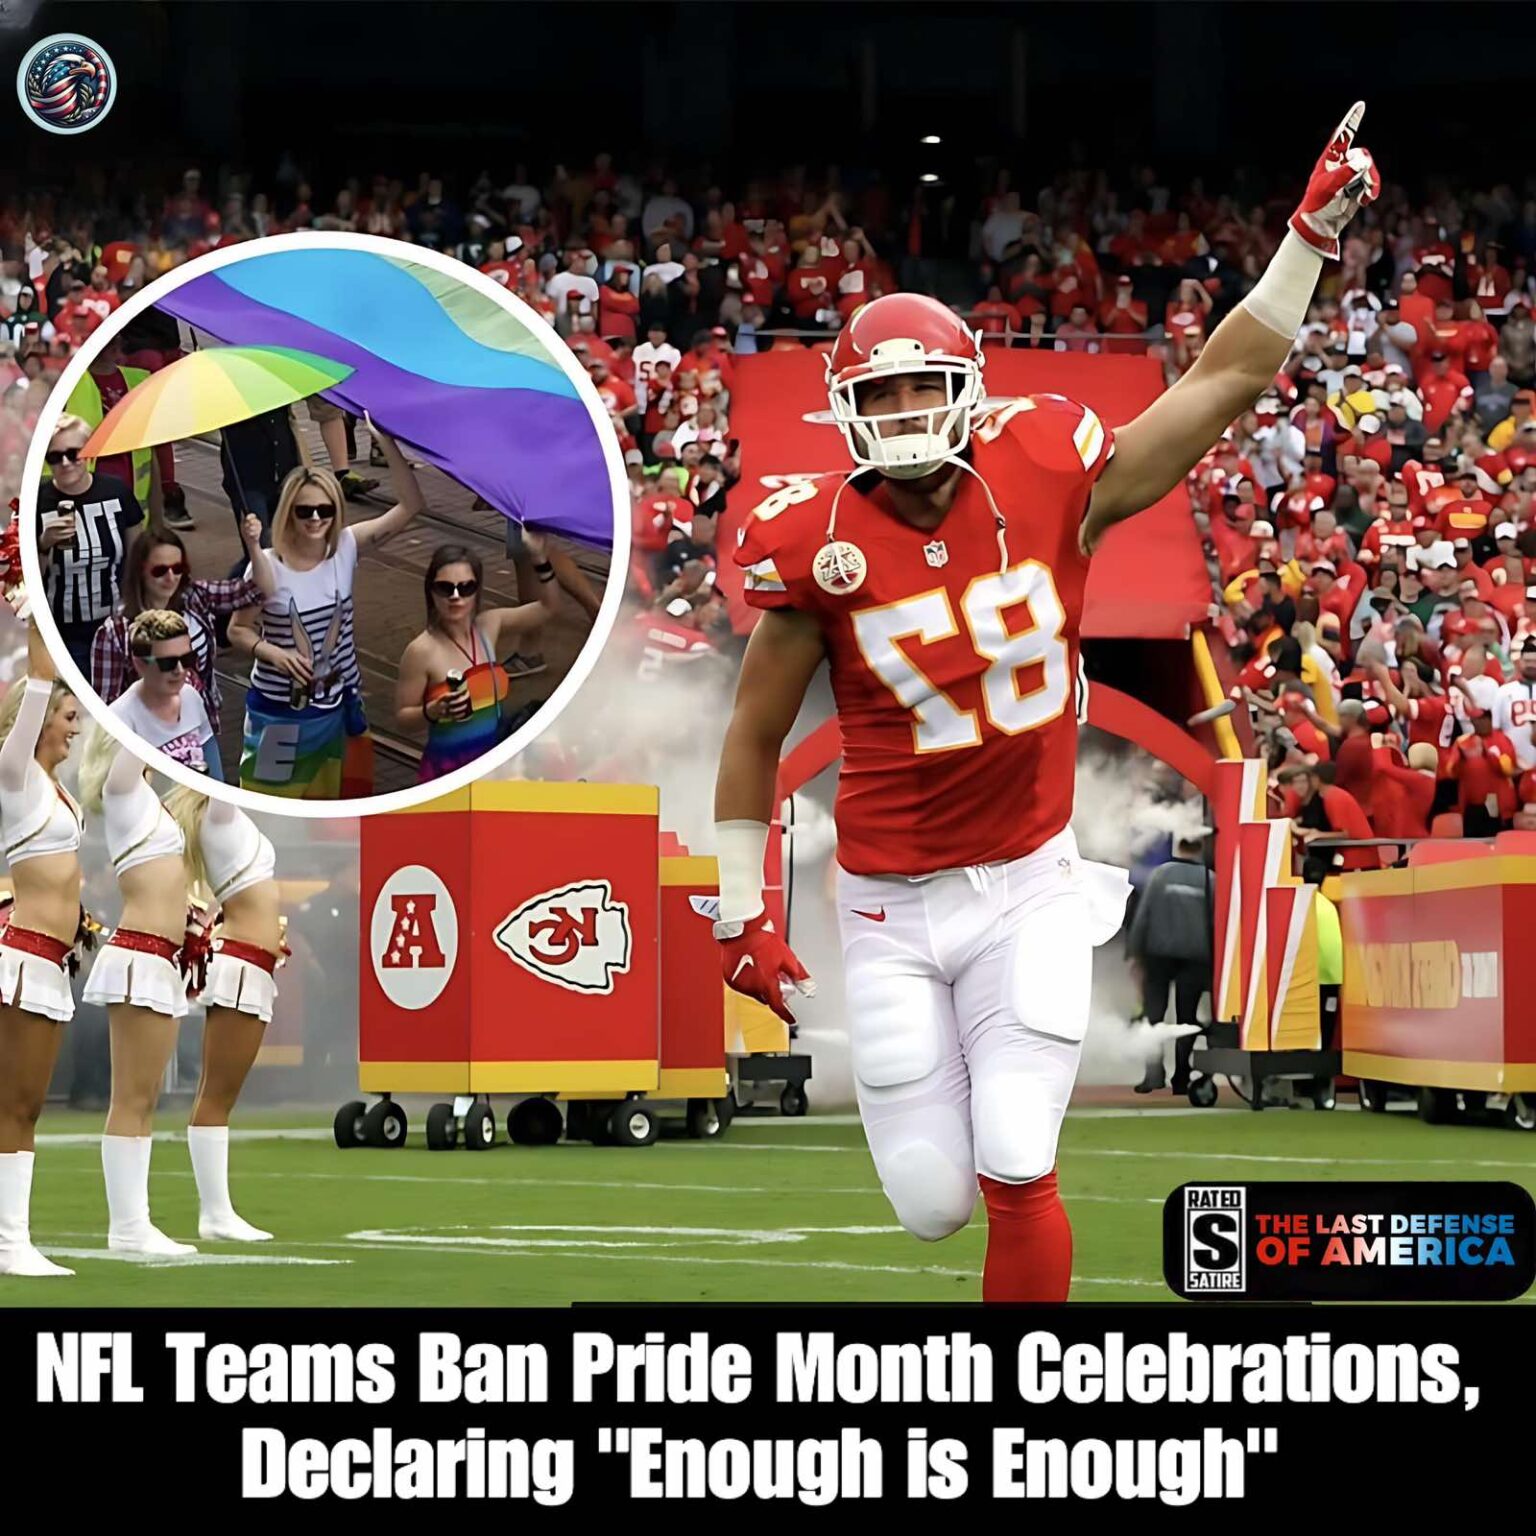 NFL Teams Ban Pride Month Celebrations, Declaring “Enough is Enough”